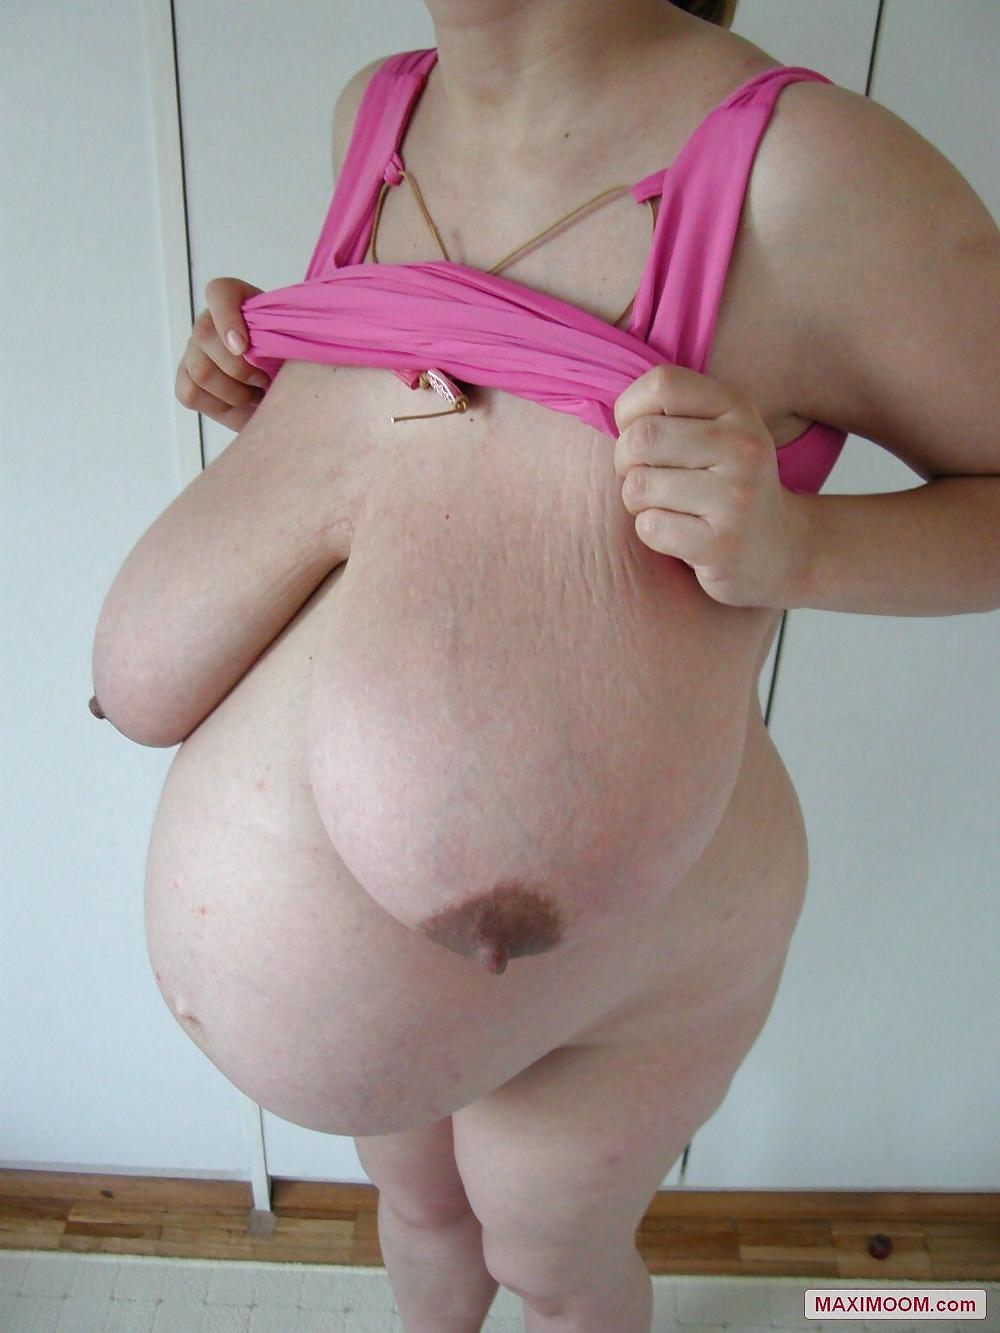 Sex More bbw & chubby women image